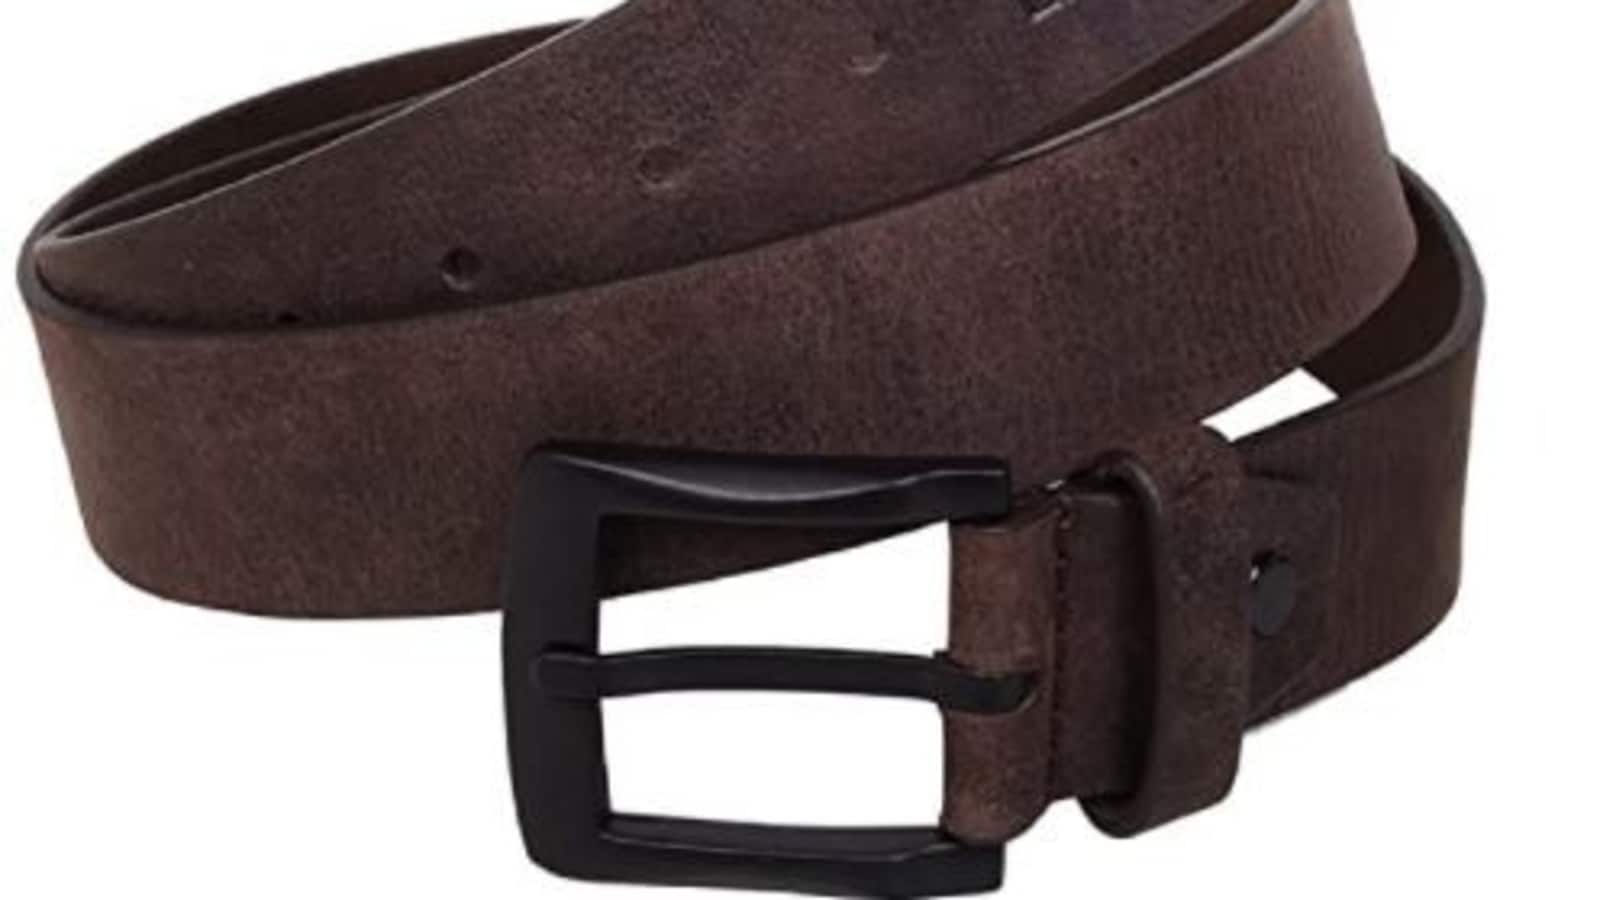 Accessories Belts Canvas Belts Noosa Canvas Belt brown casual look 